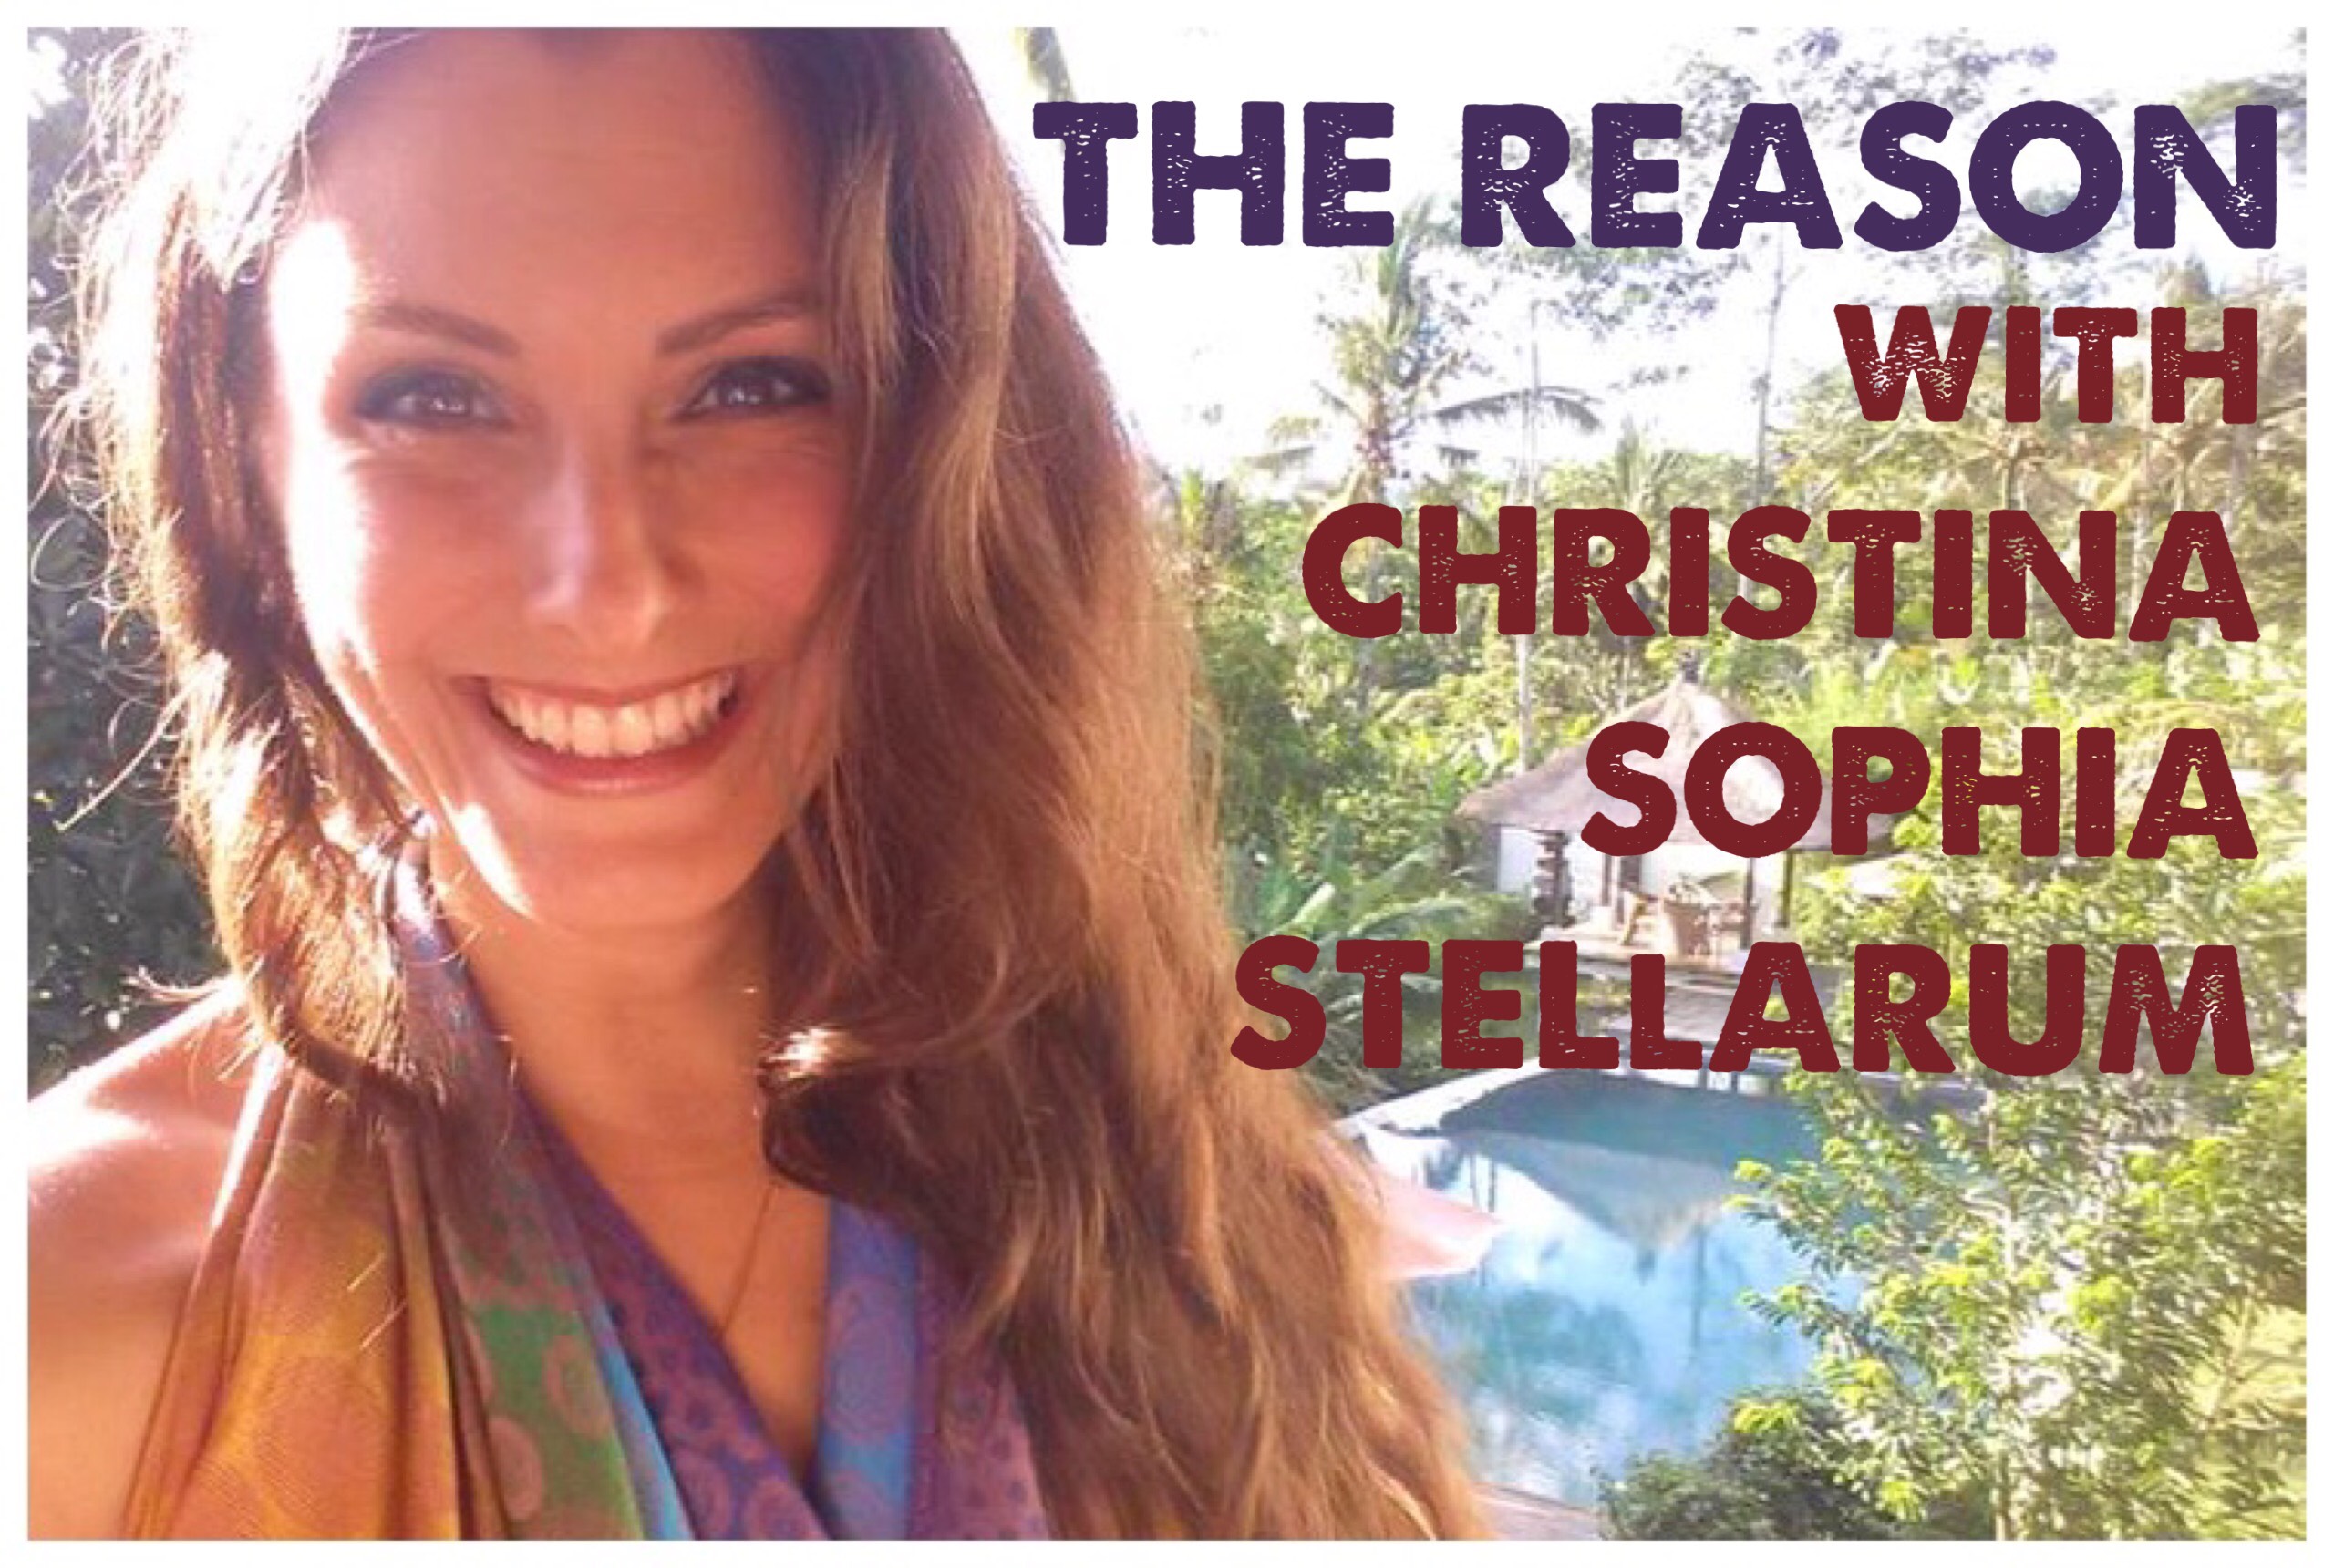 THE REASON Interview with Christina Sophia Stellarum